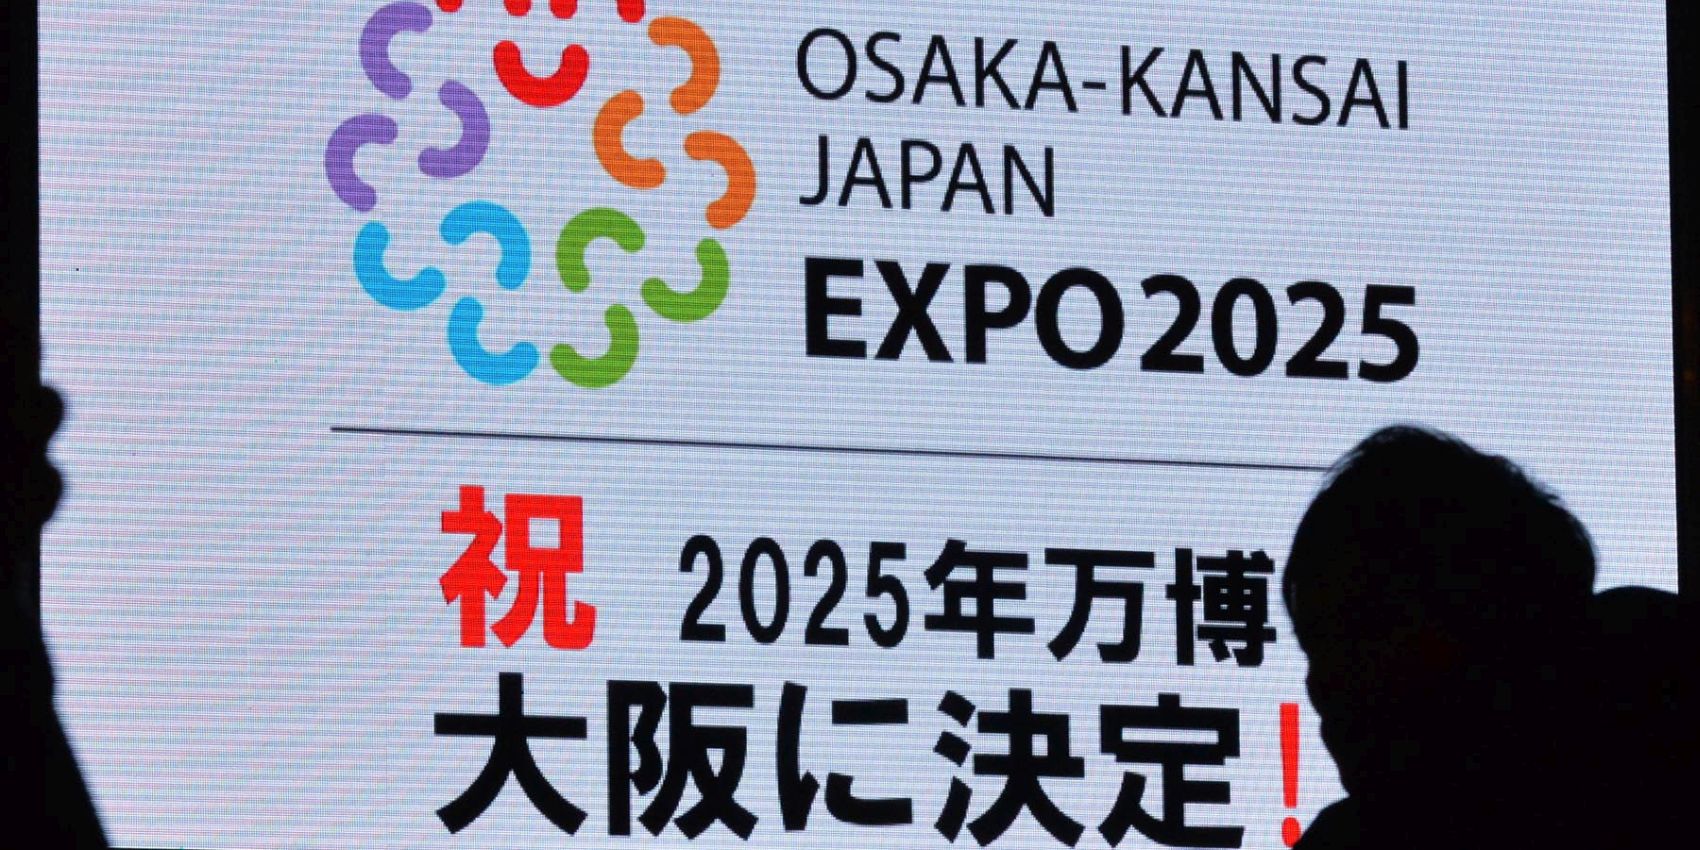 Japan Osaka World Expo 2025